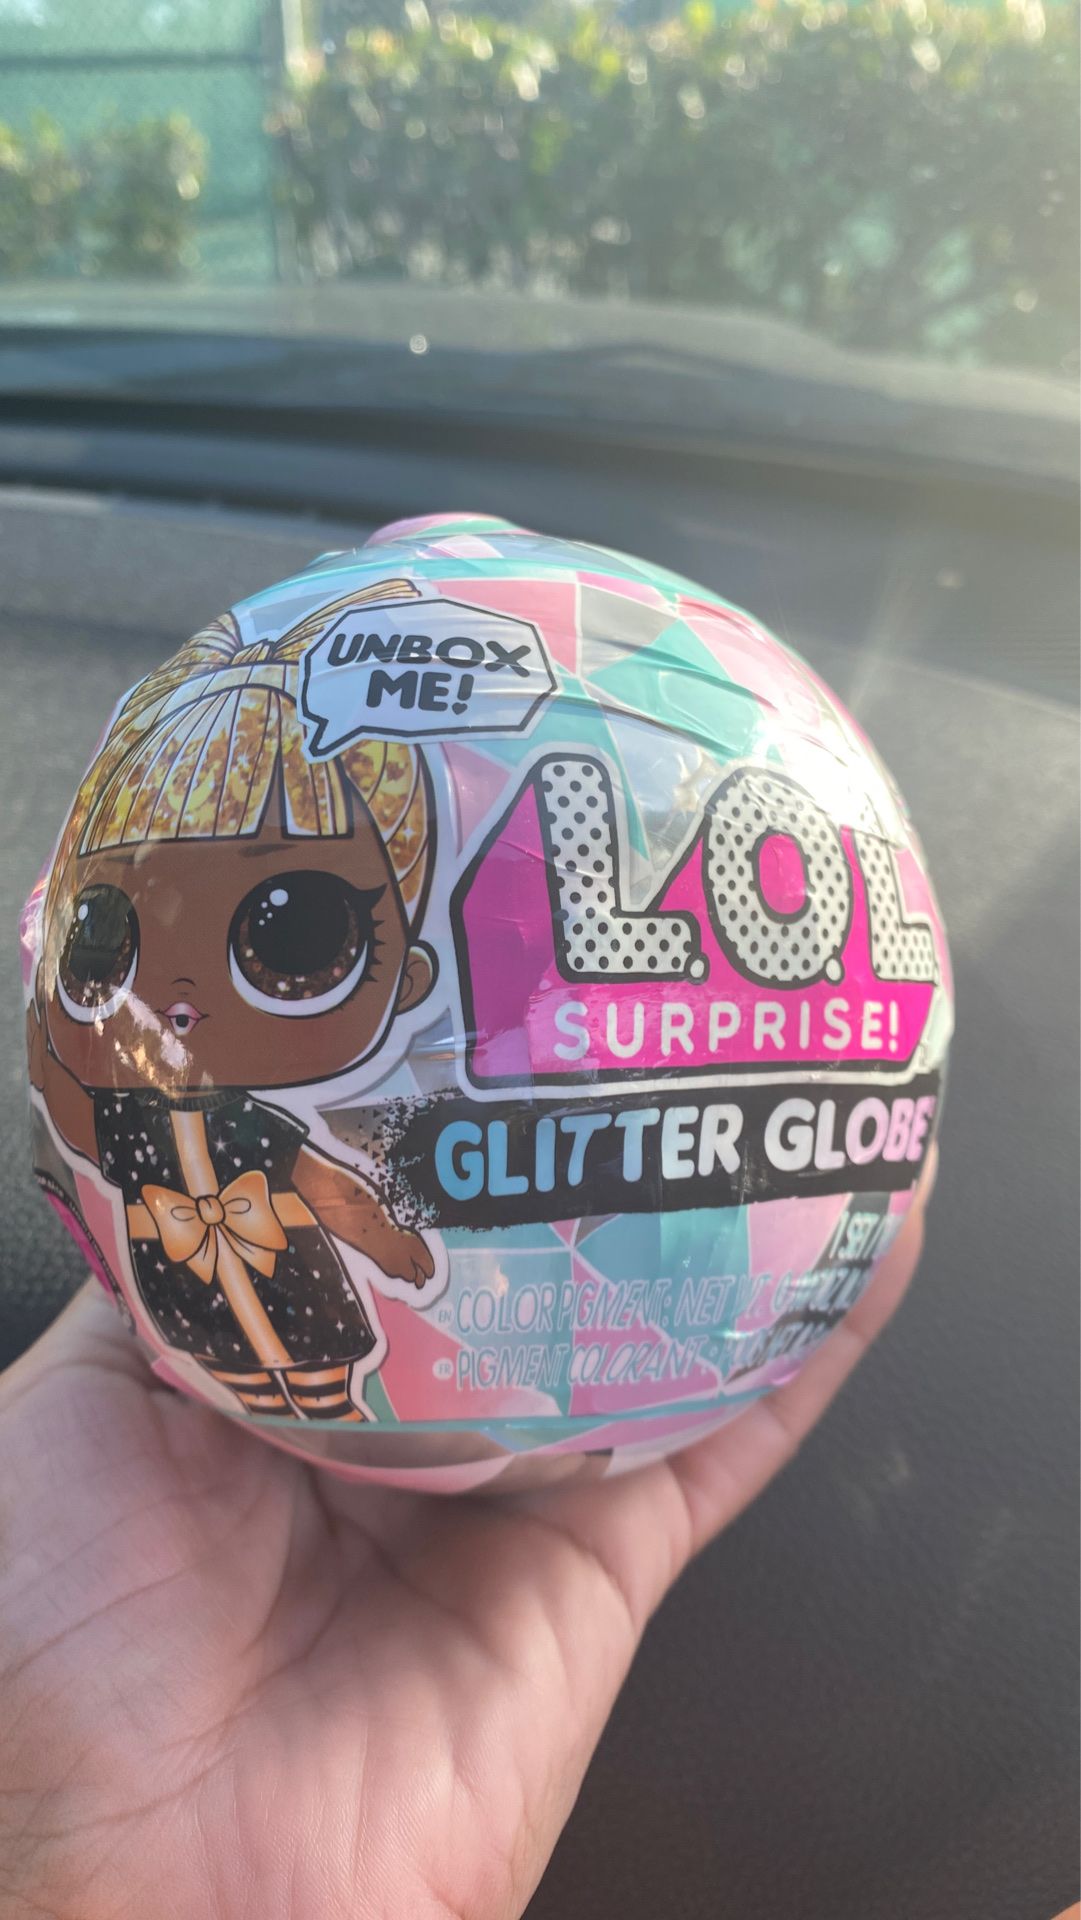 LOL surprise Glitter Globe